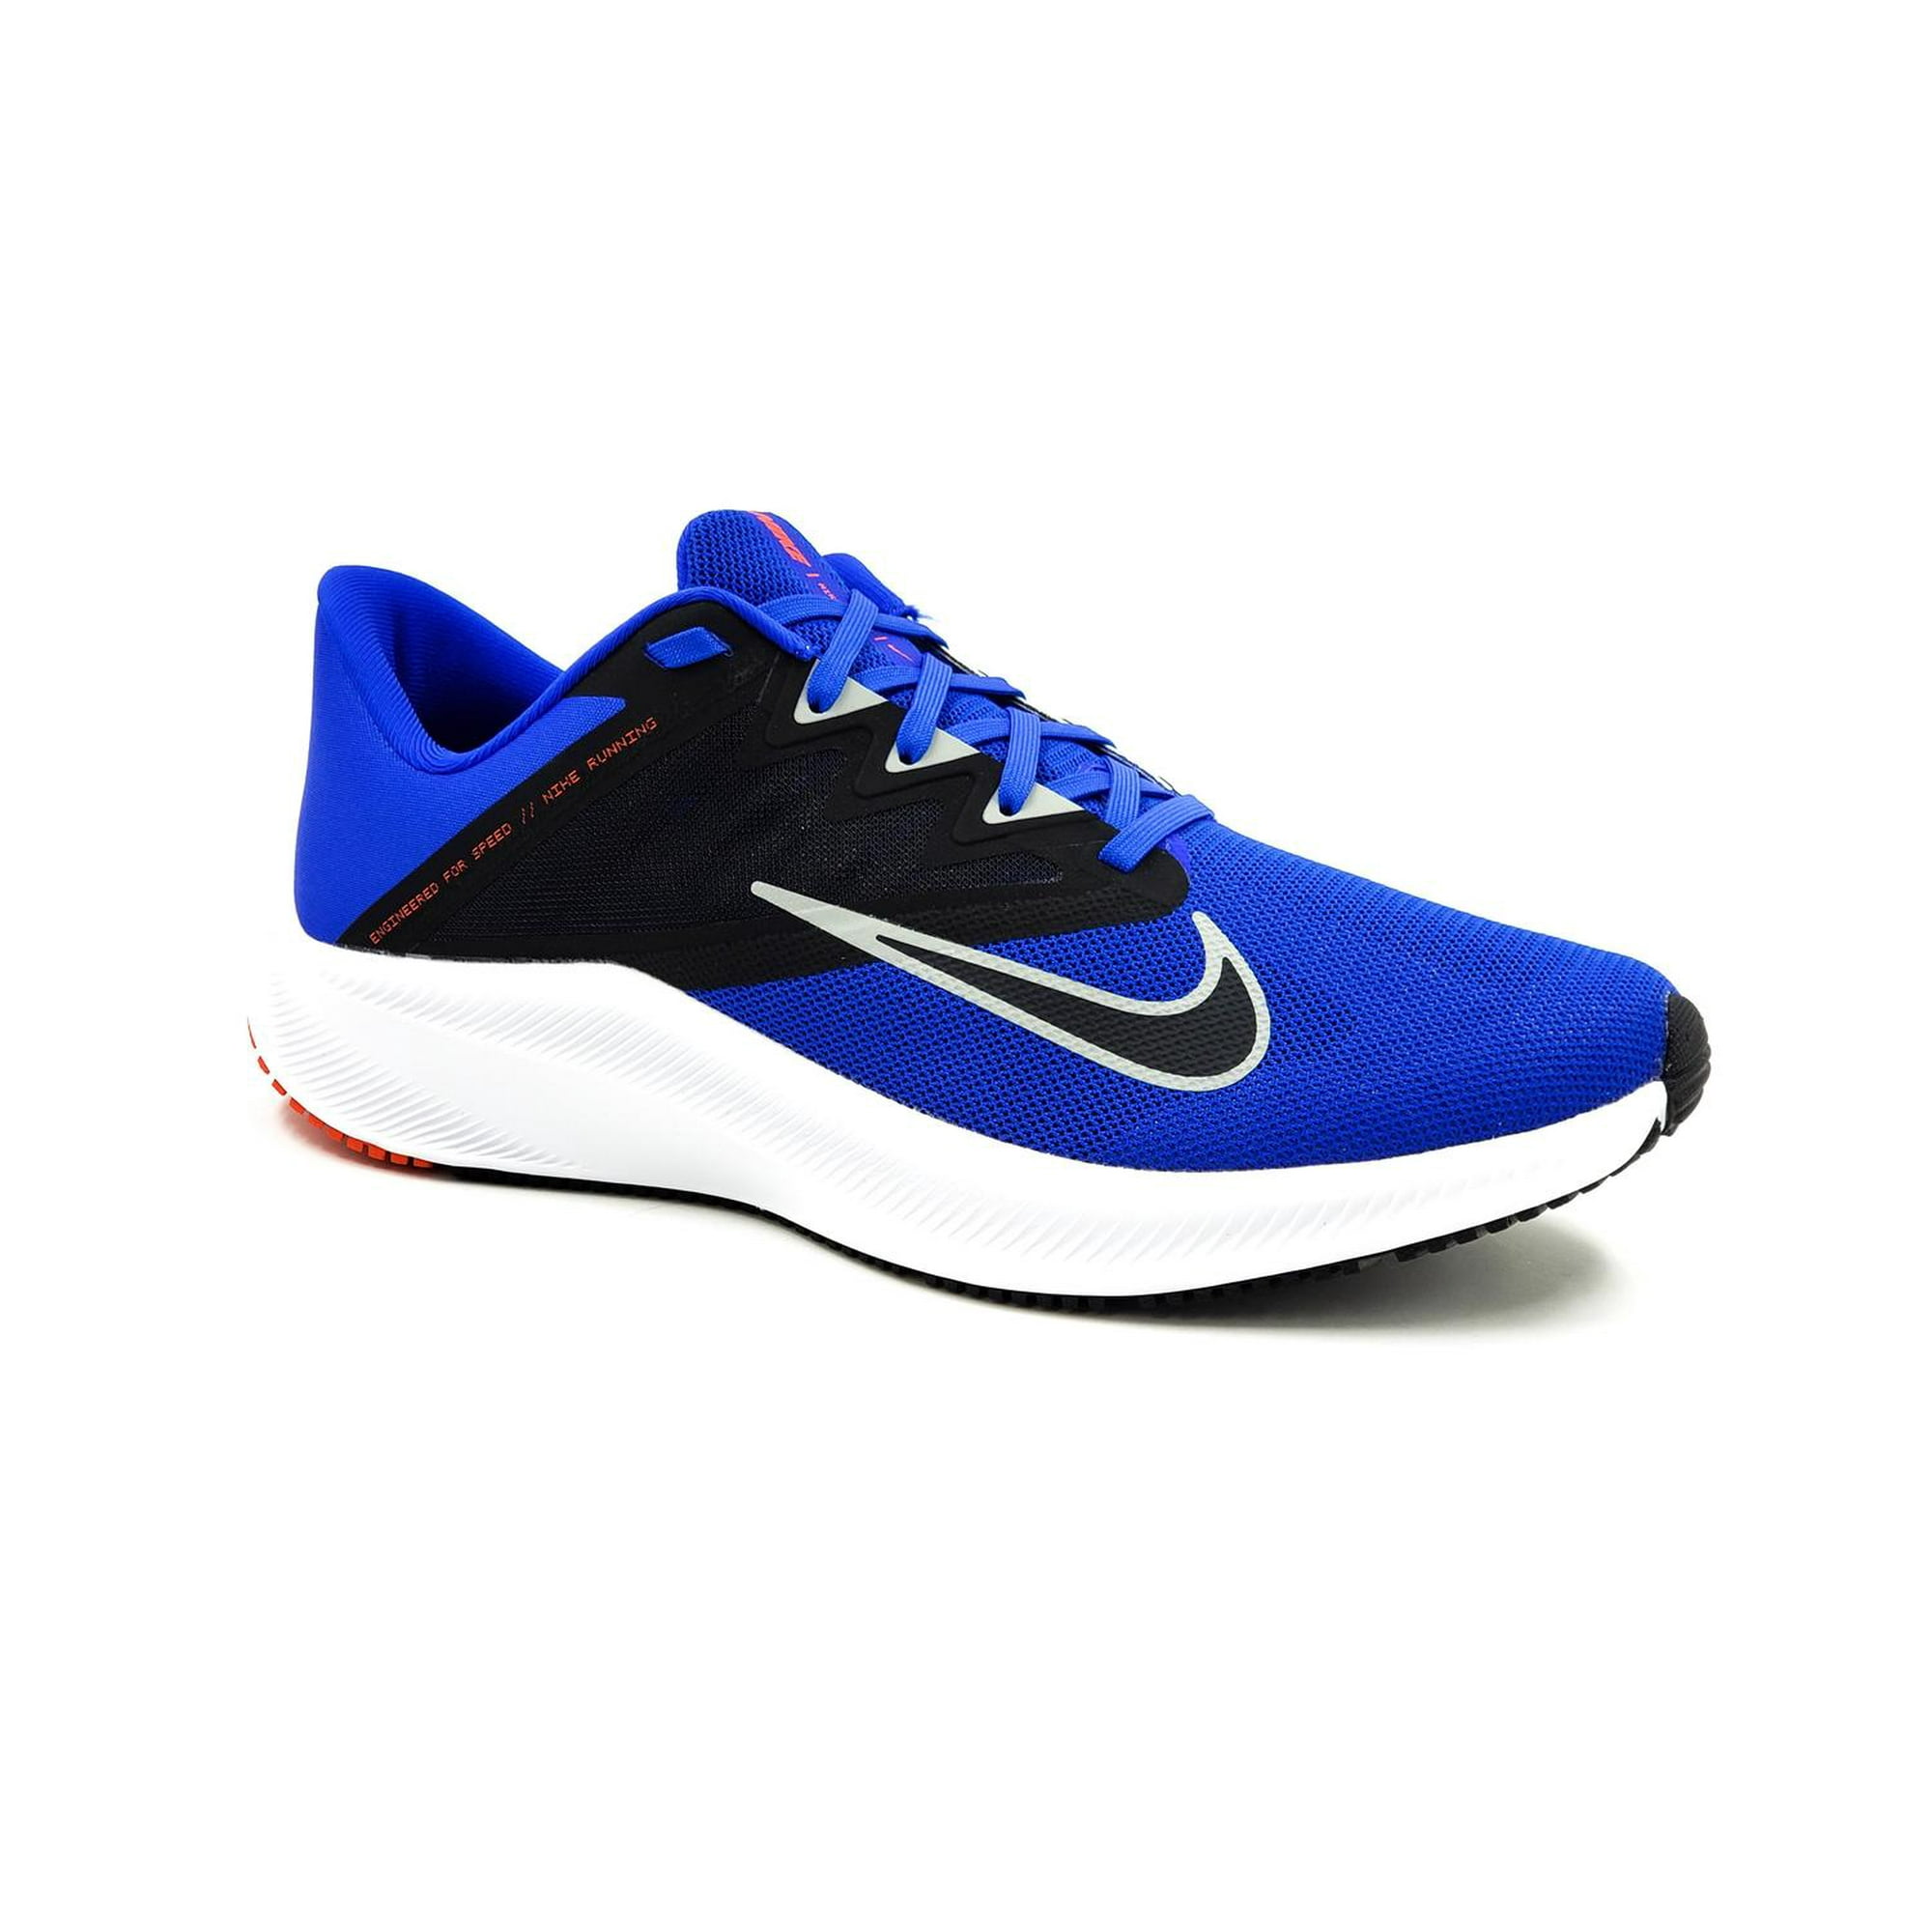 Tenis Nike Quest 3 CD0230400 Azul/Negro-Hombre azul 26 Nike 